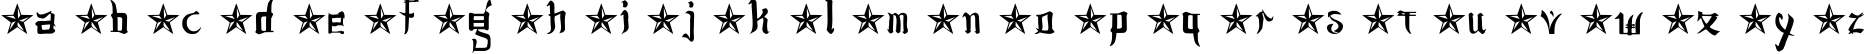 Пример написания английского алфавита шрифтом jsa lovechinese